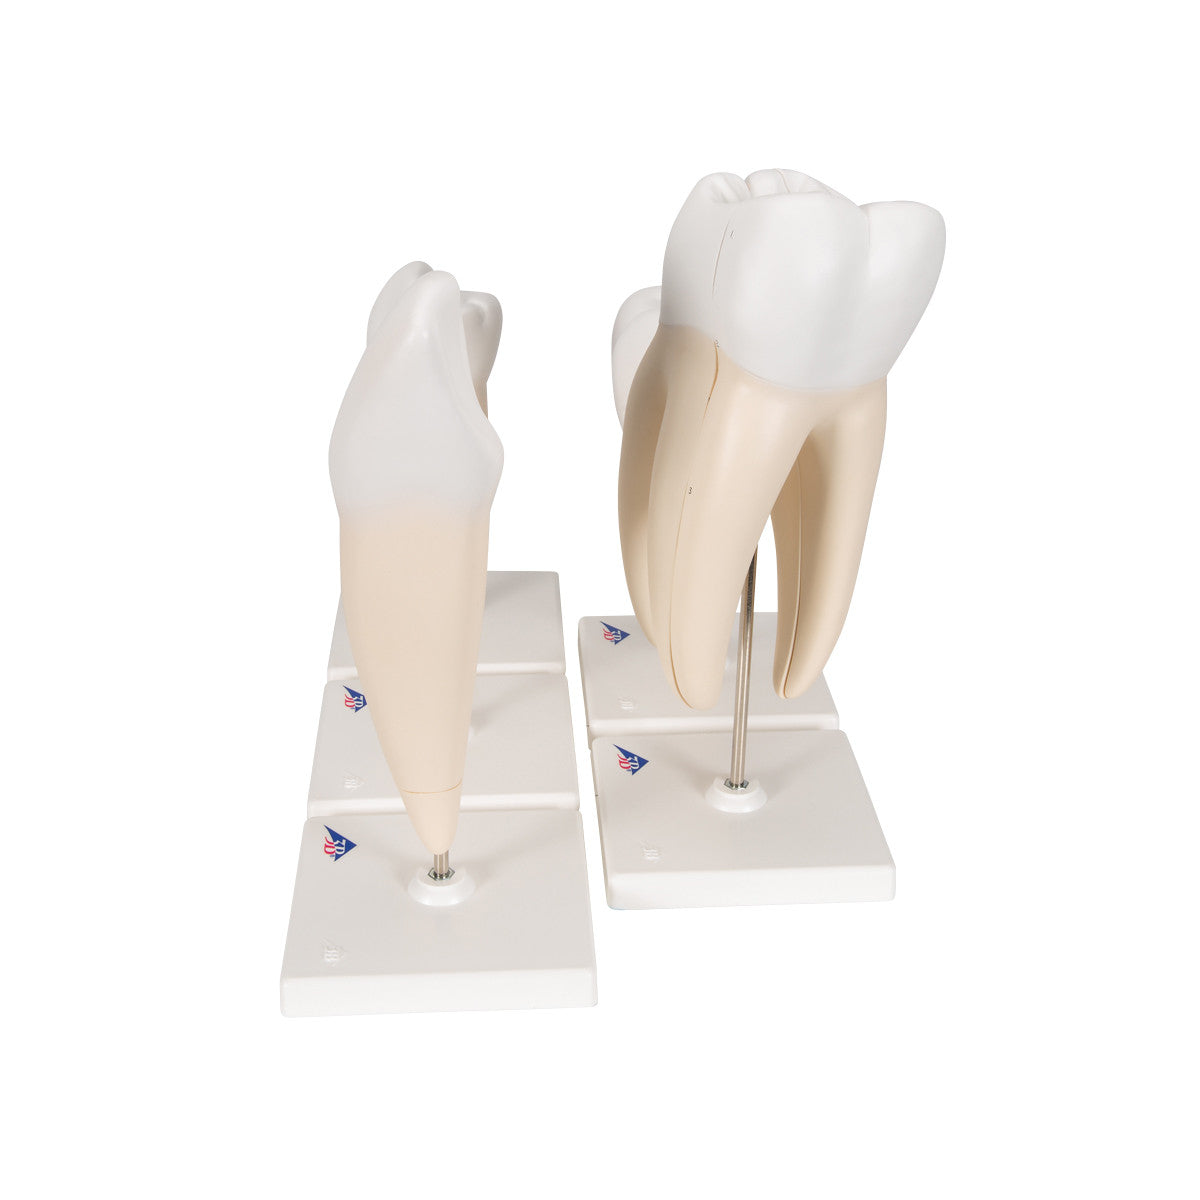 Human Tooth Models Set "Classic Series", 5 Models